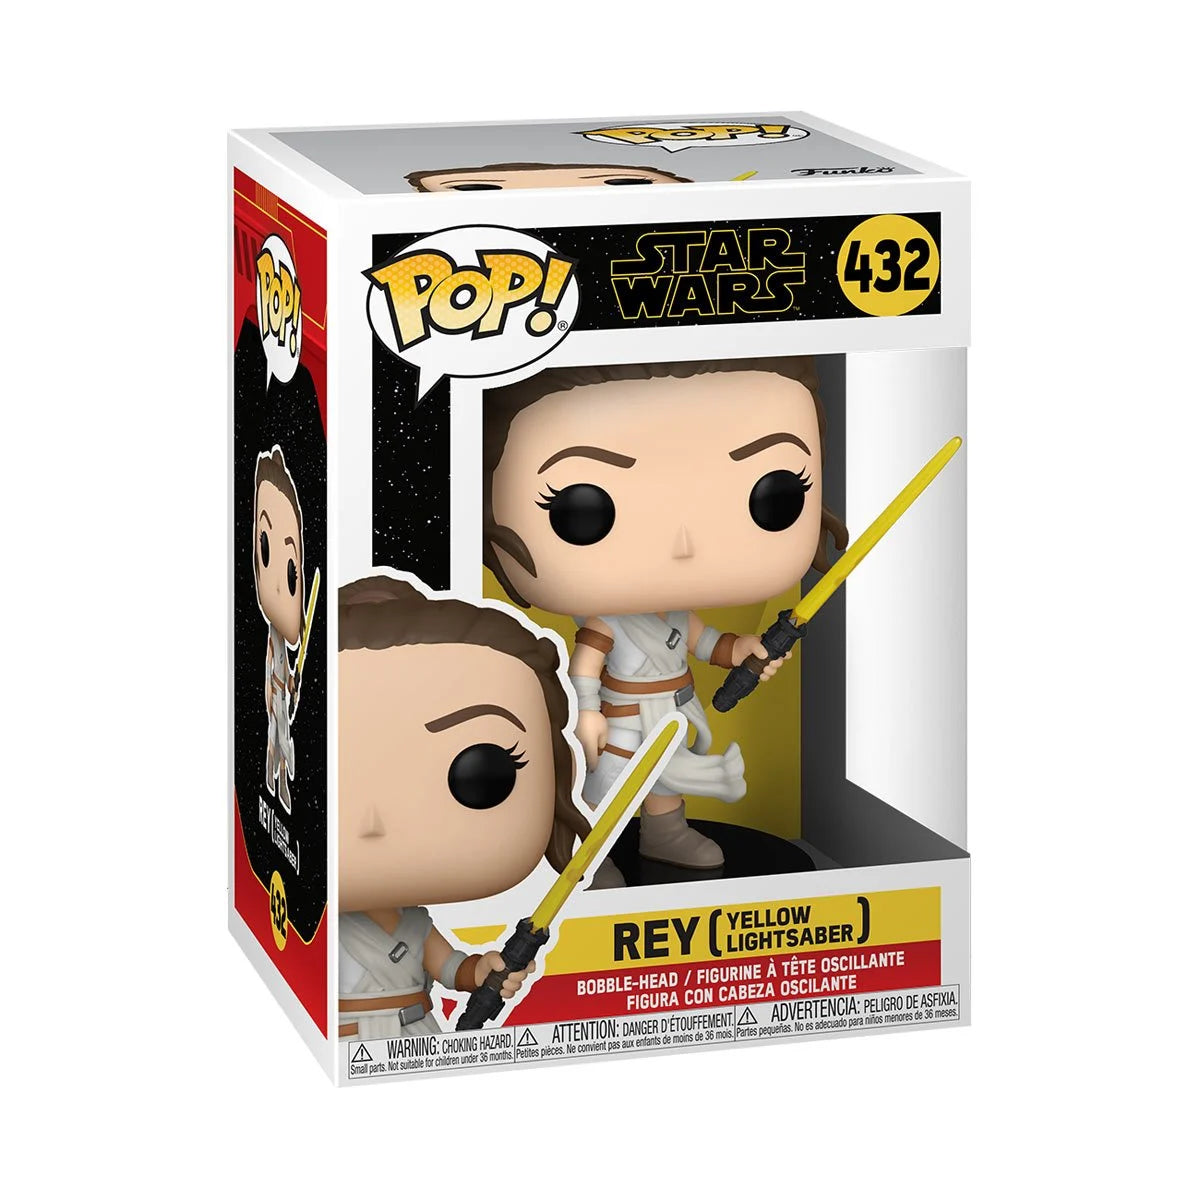 Rey with Yellow Saber Star Wars: The Rise of Skywalker Pop! Vinyl Figure